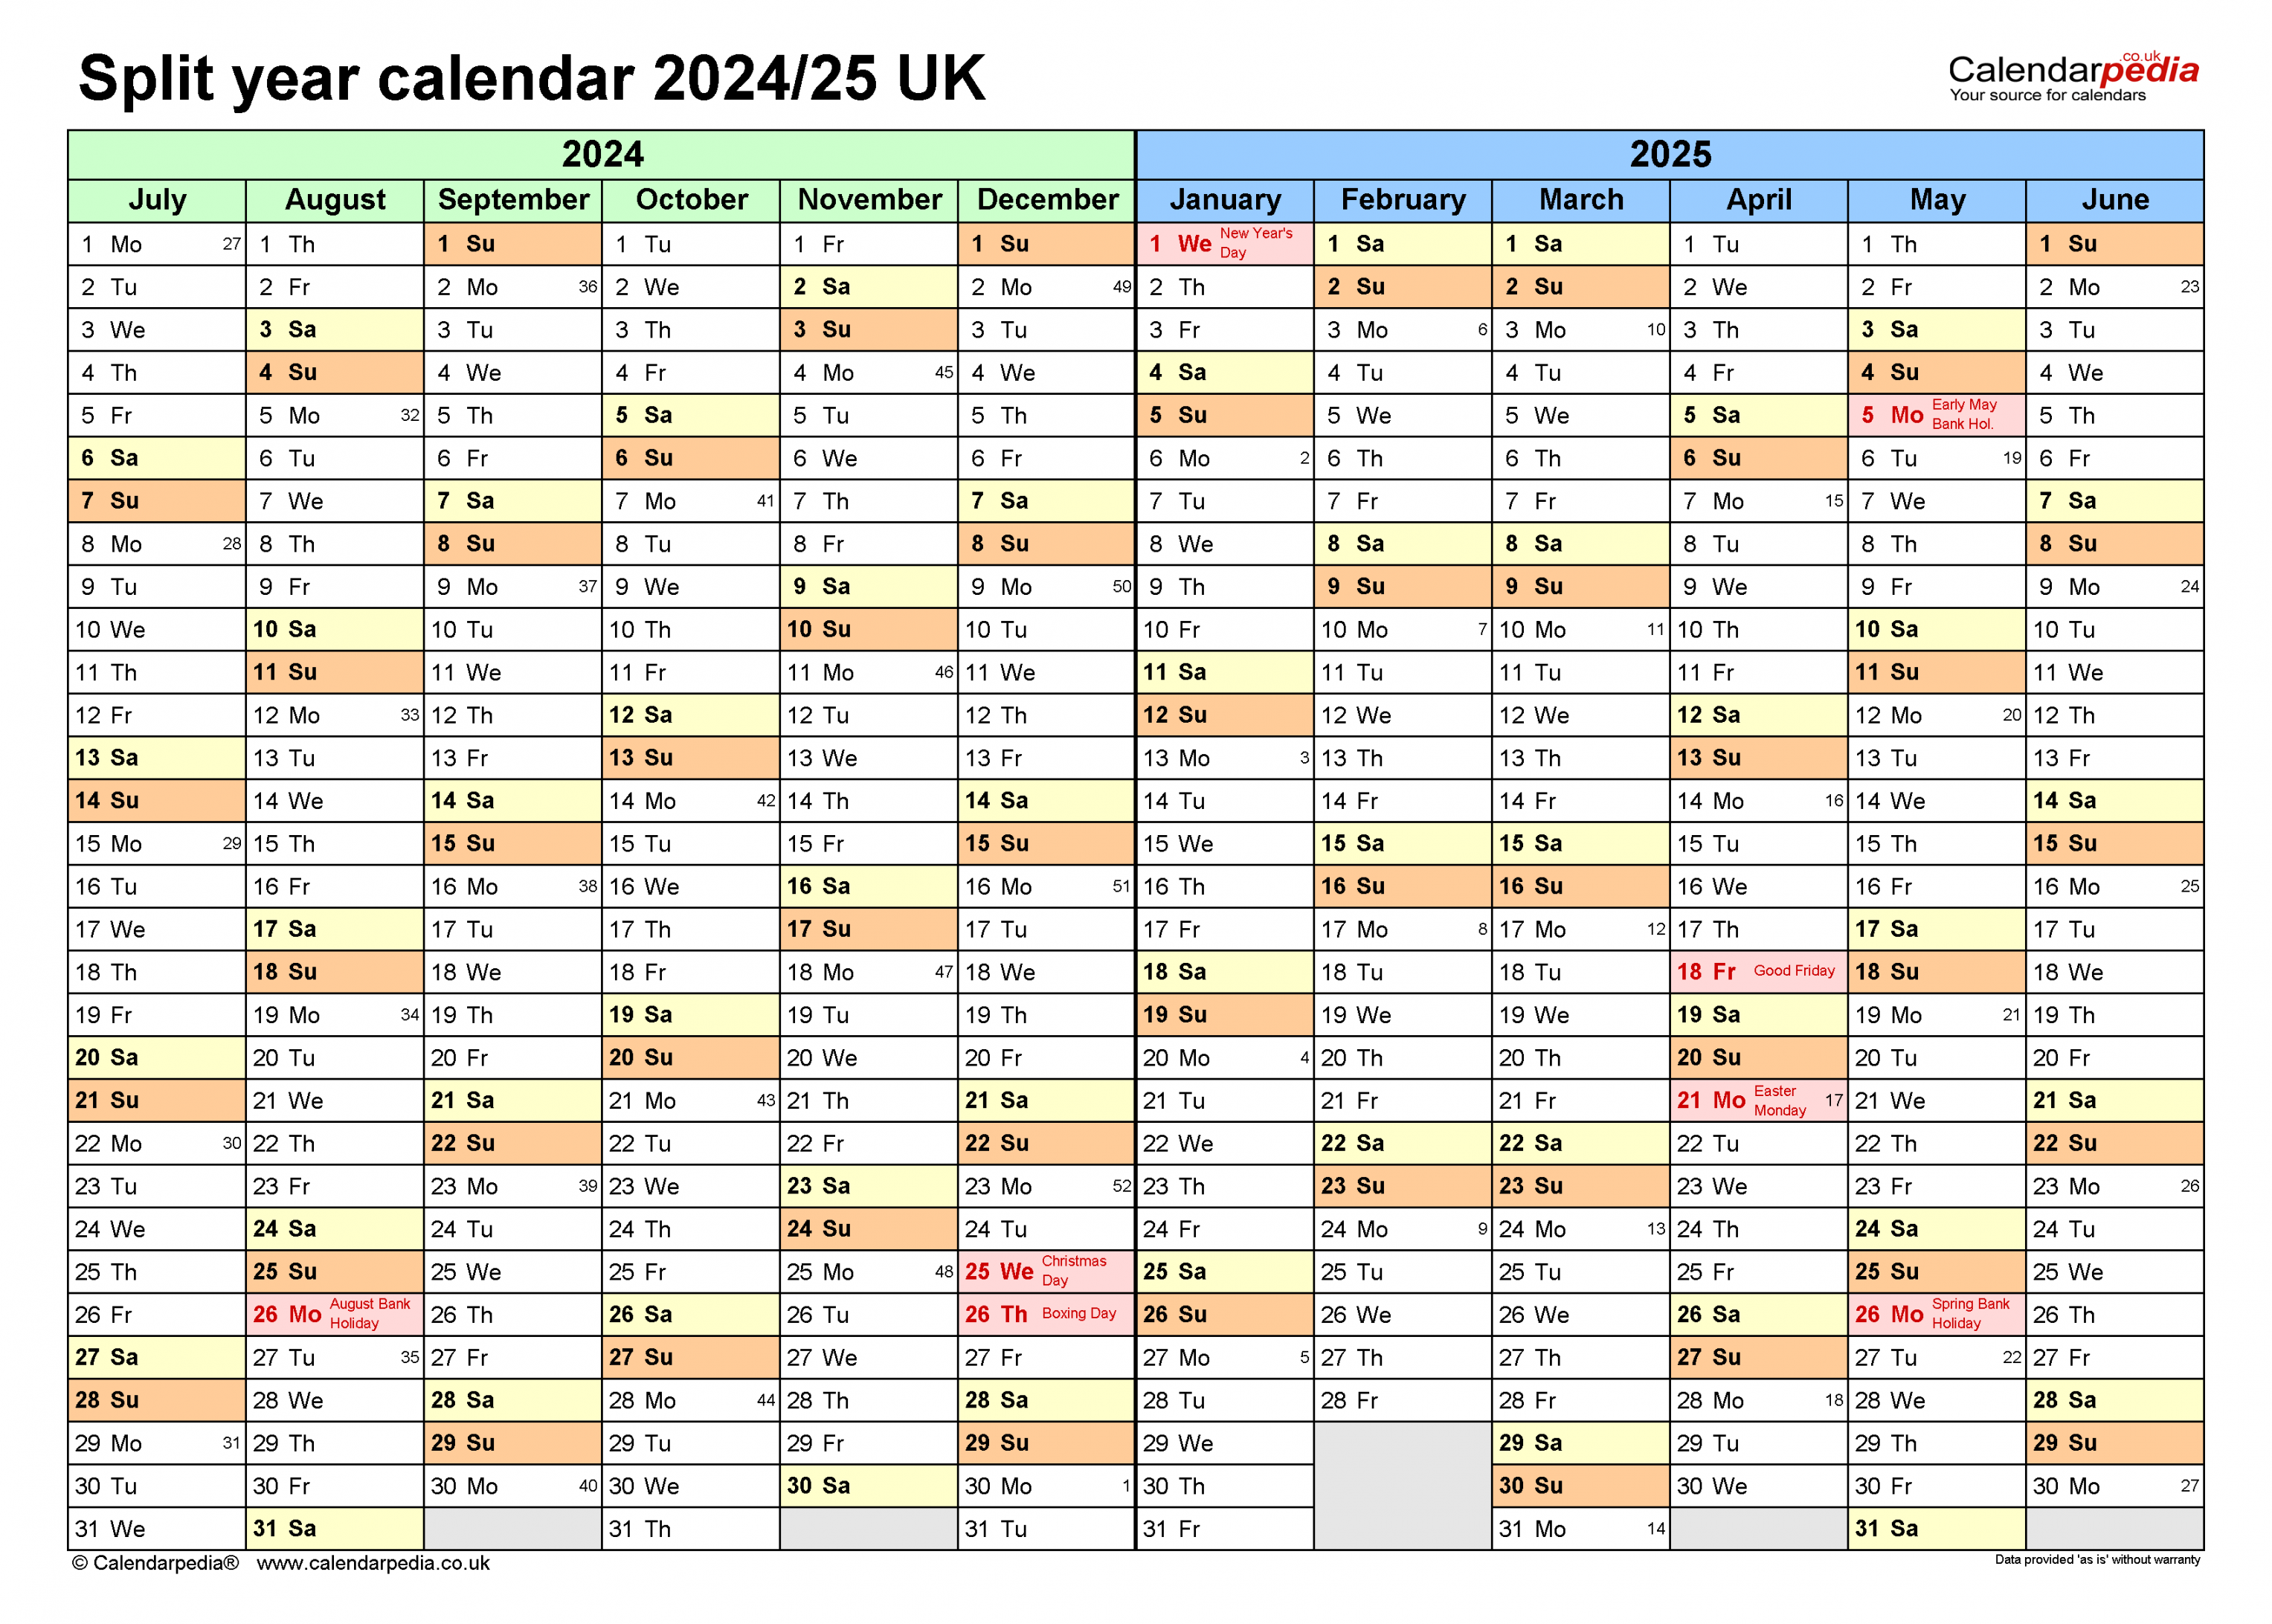 Split year calendars / UK (July to June) for PDF